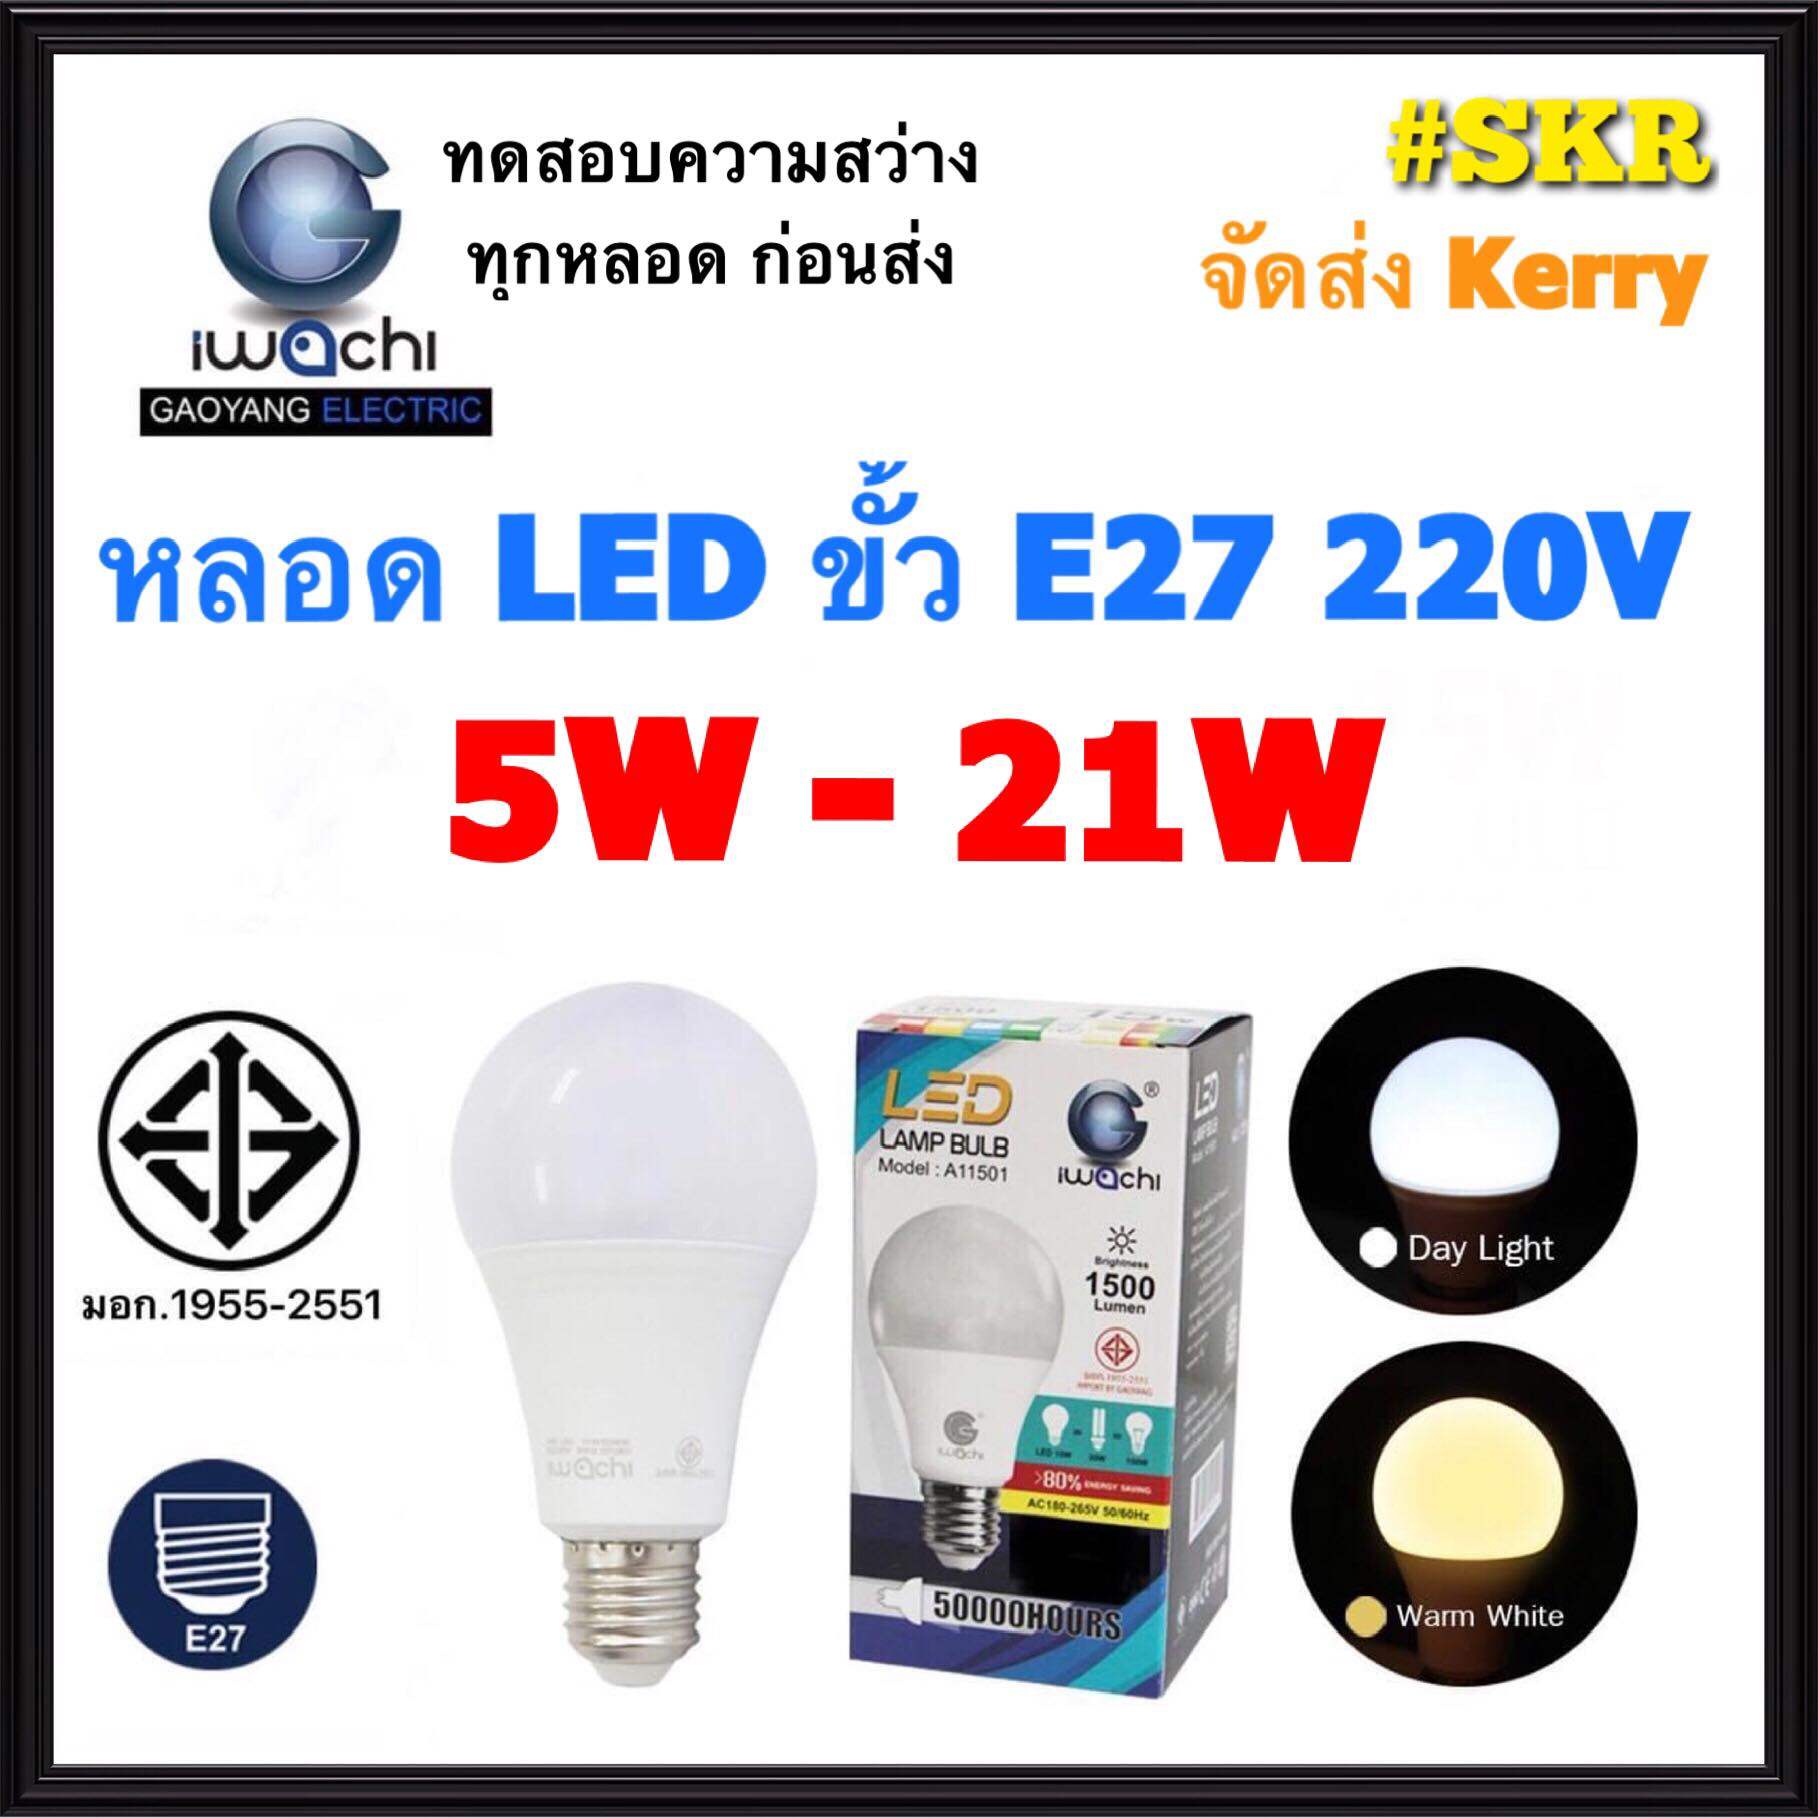 IWACHI หลอดไฟ LED BLUB 5W 7W 9W 13W 15W 18W 21W แสงขาว Daylight แสงเหลือง Warmwhite ขั้ว E27 220V หลอด LED หลอดกลม